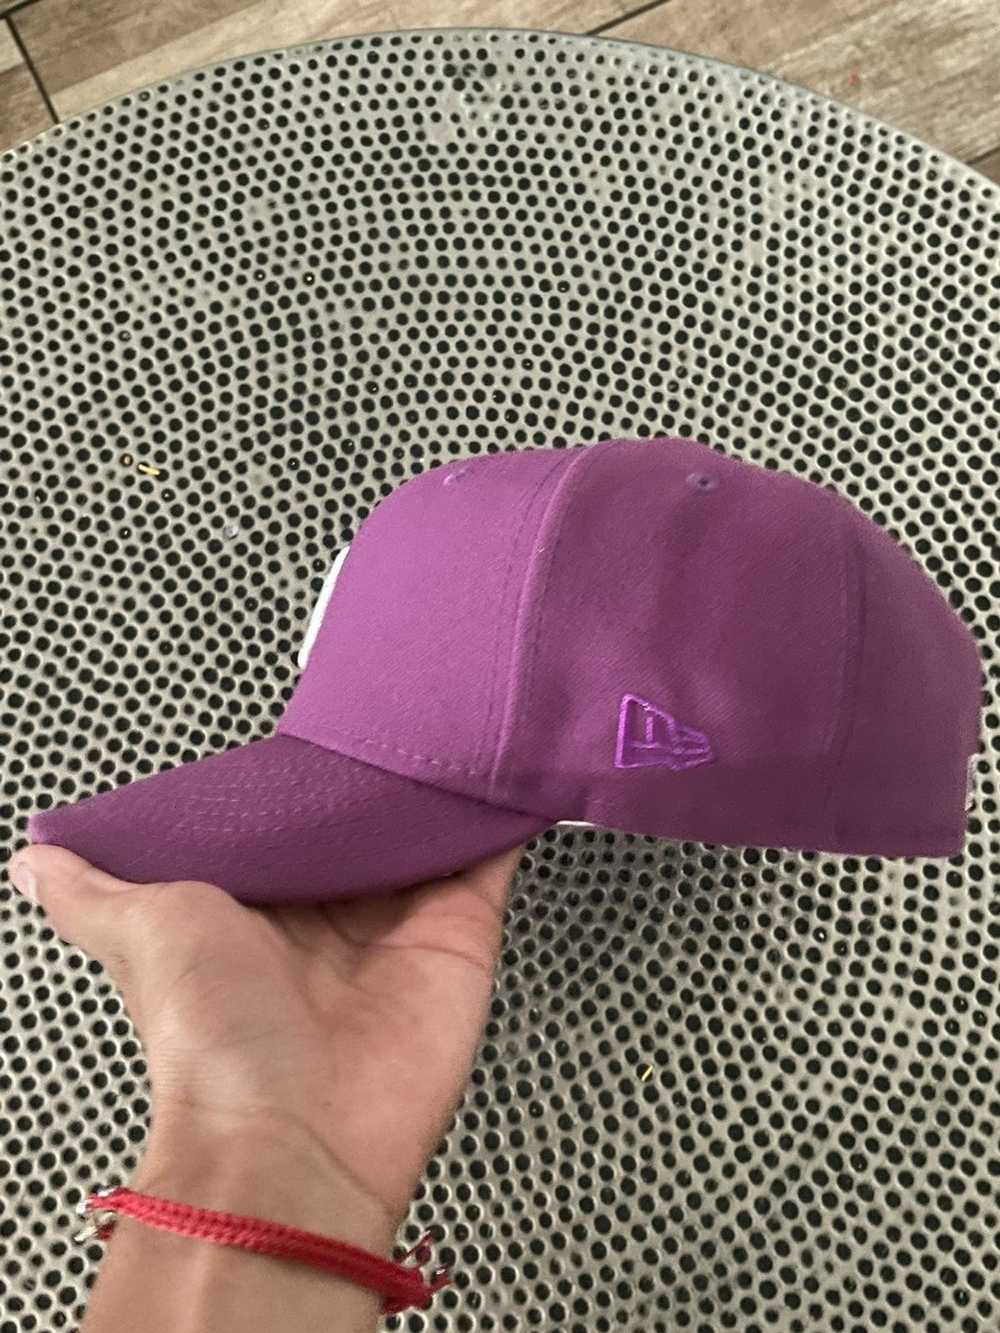 New Era Rare Hat Size 7 - image 3